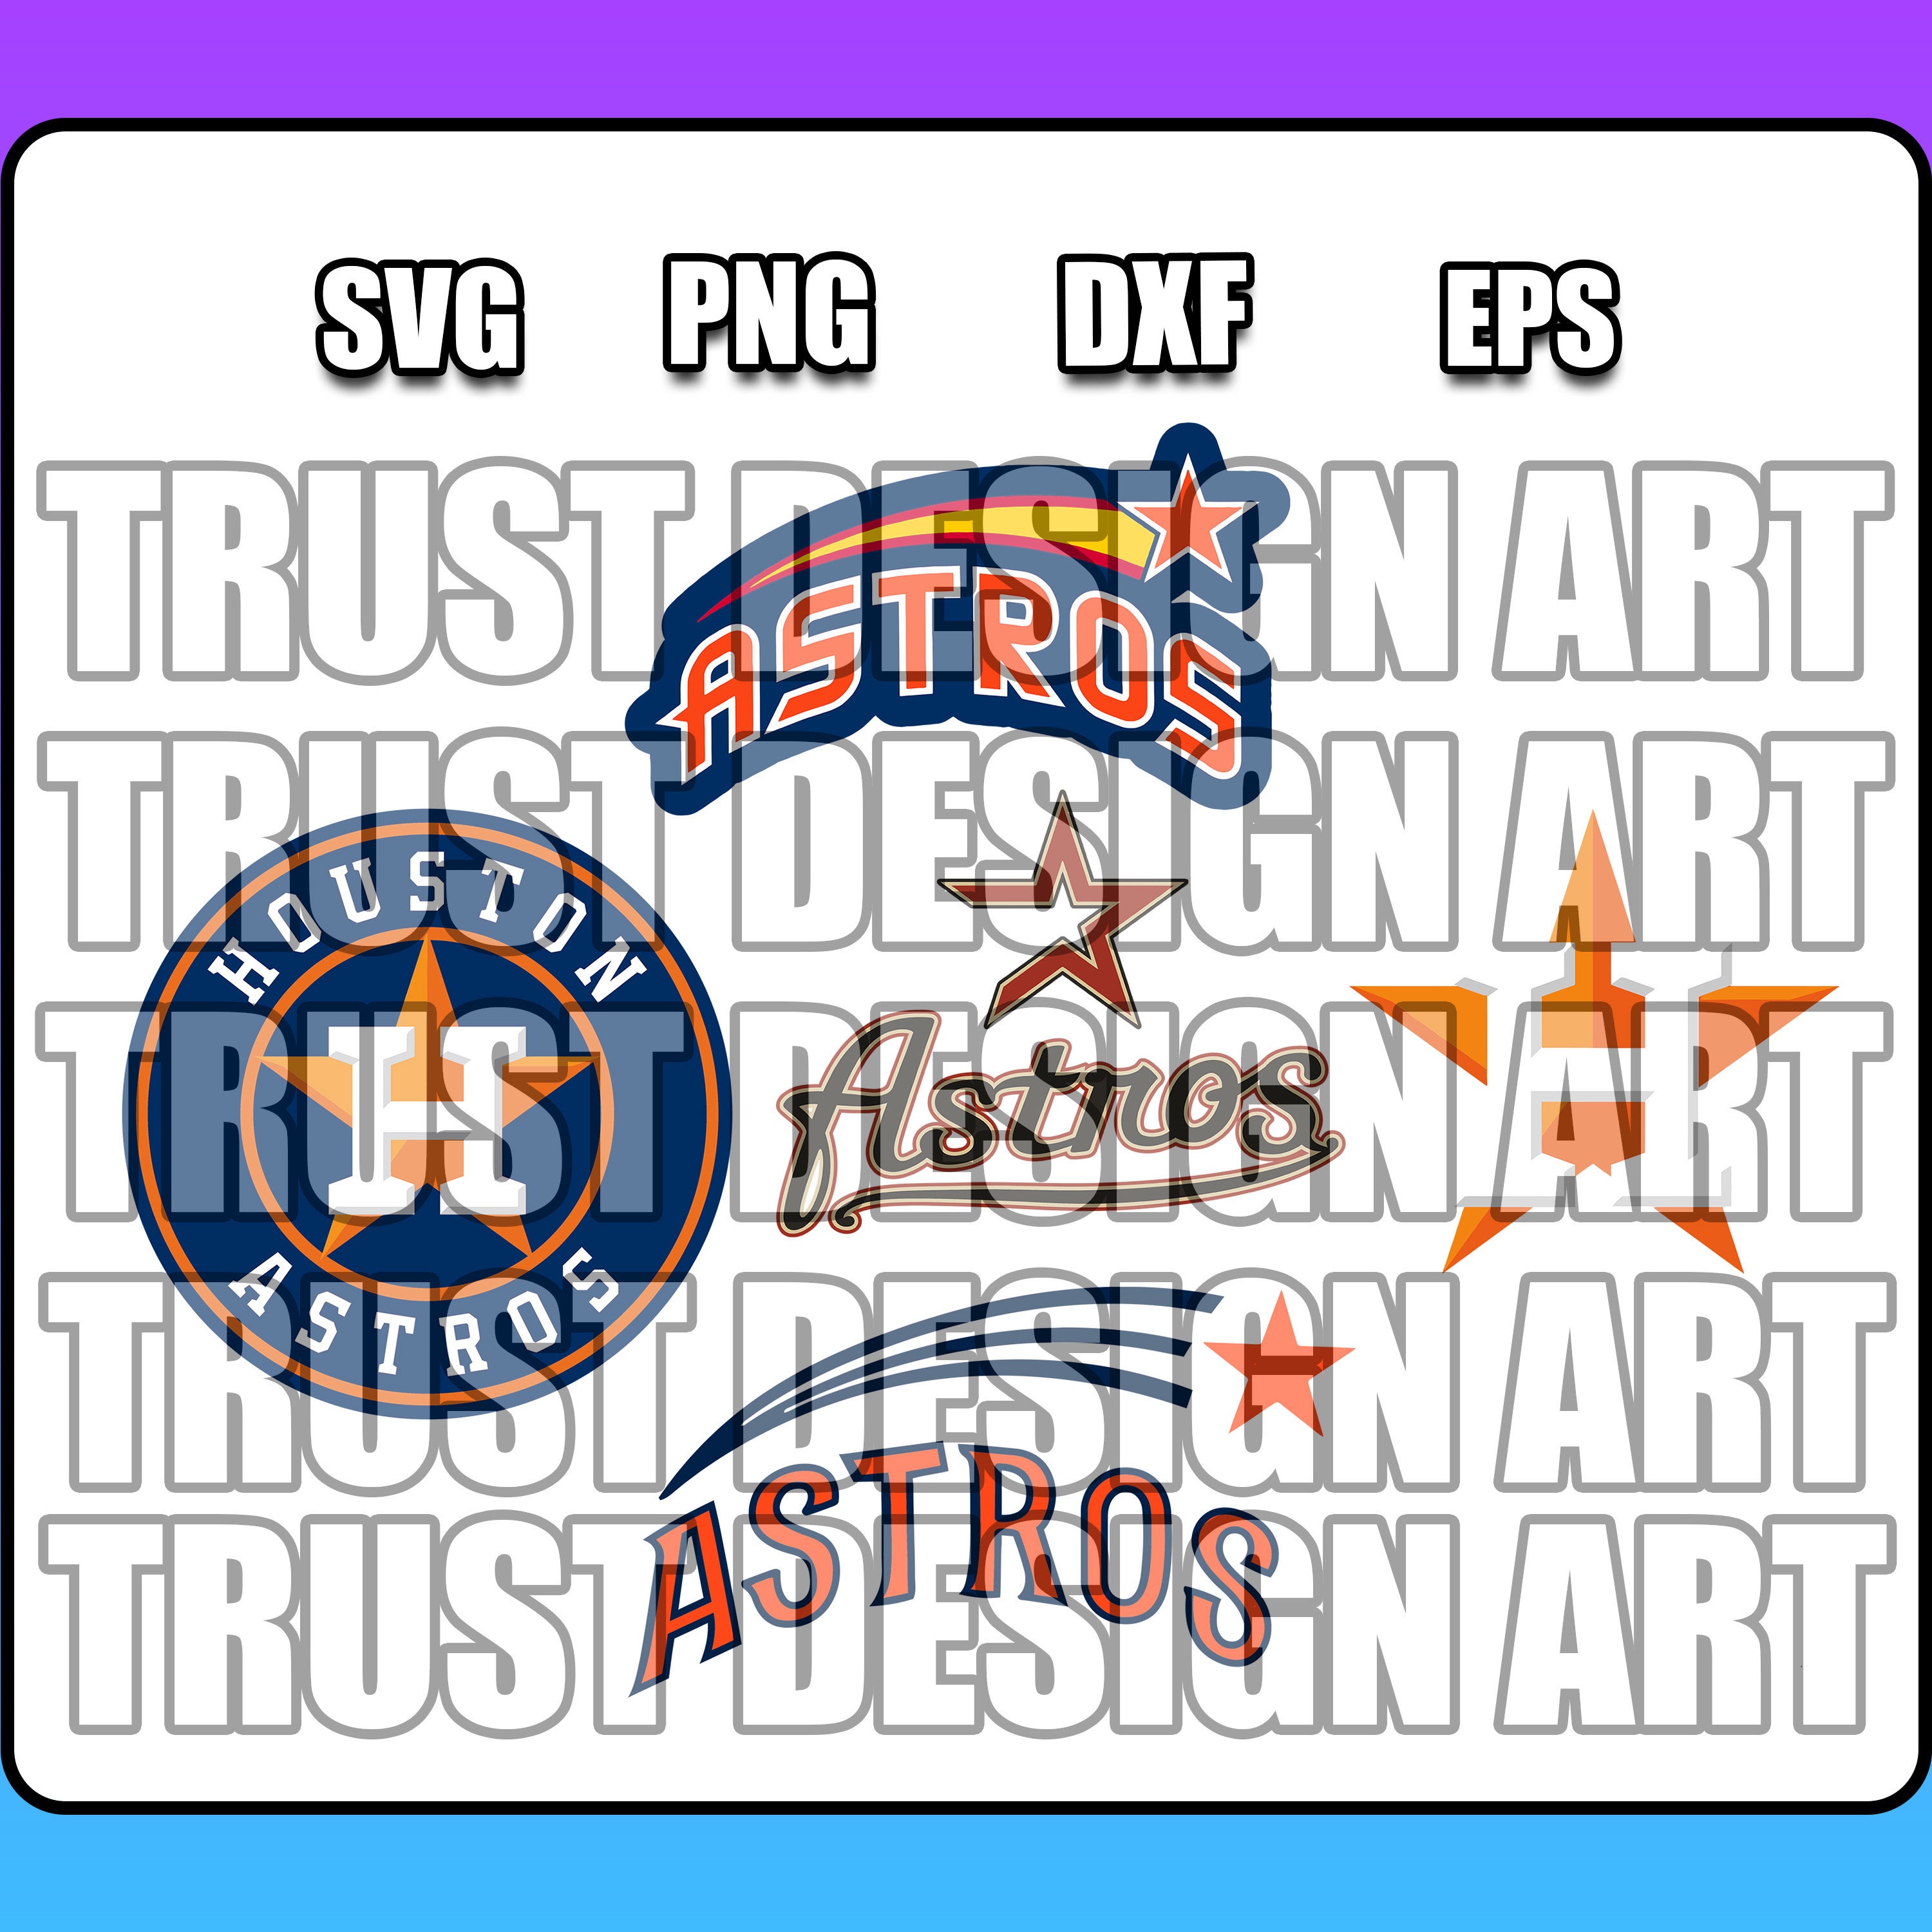 Houston-Astros svg dxf eps png, bundle MLB svg, for Cricut, Silhouette,  digital, file cut